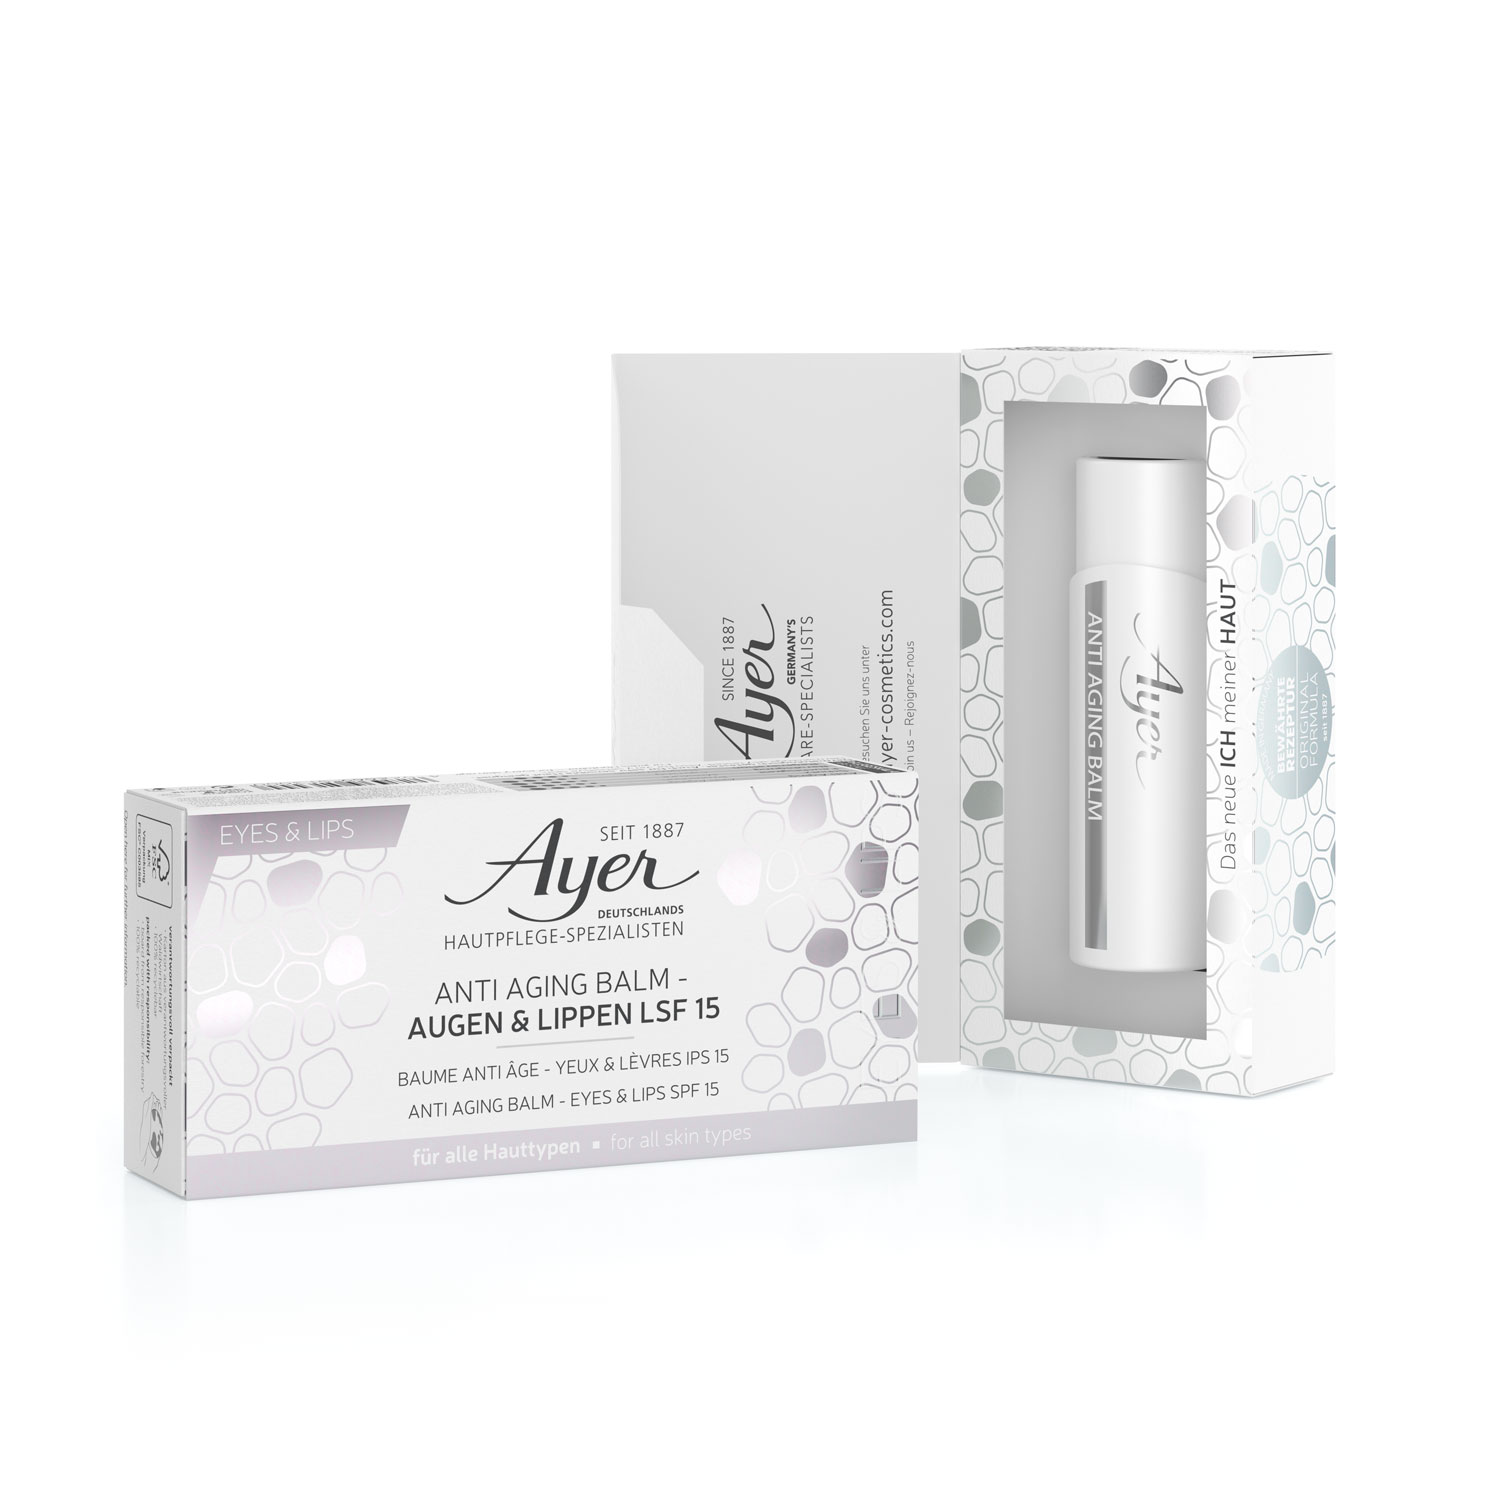 Ayer Anti Aging Balm - Augen & Lippen LSF 15